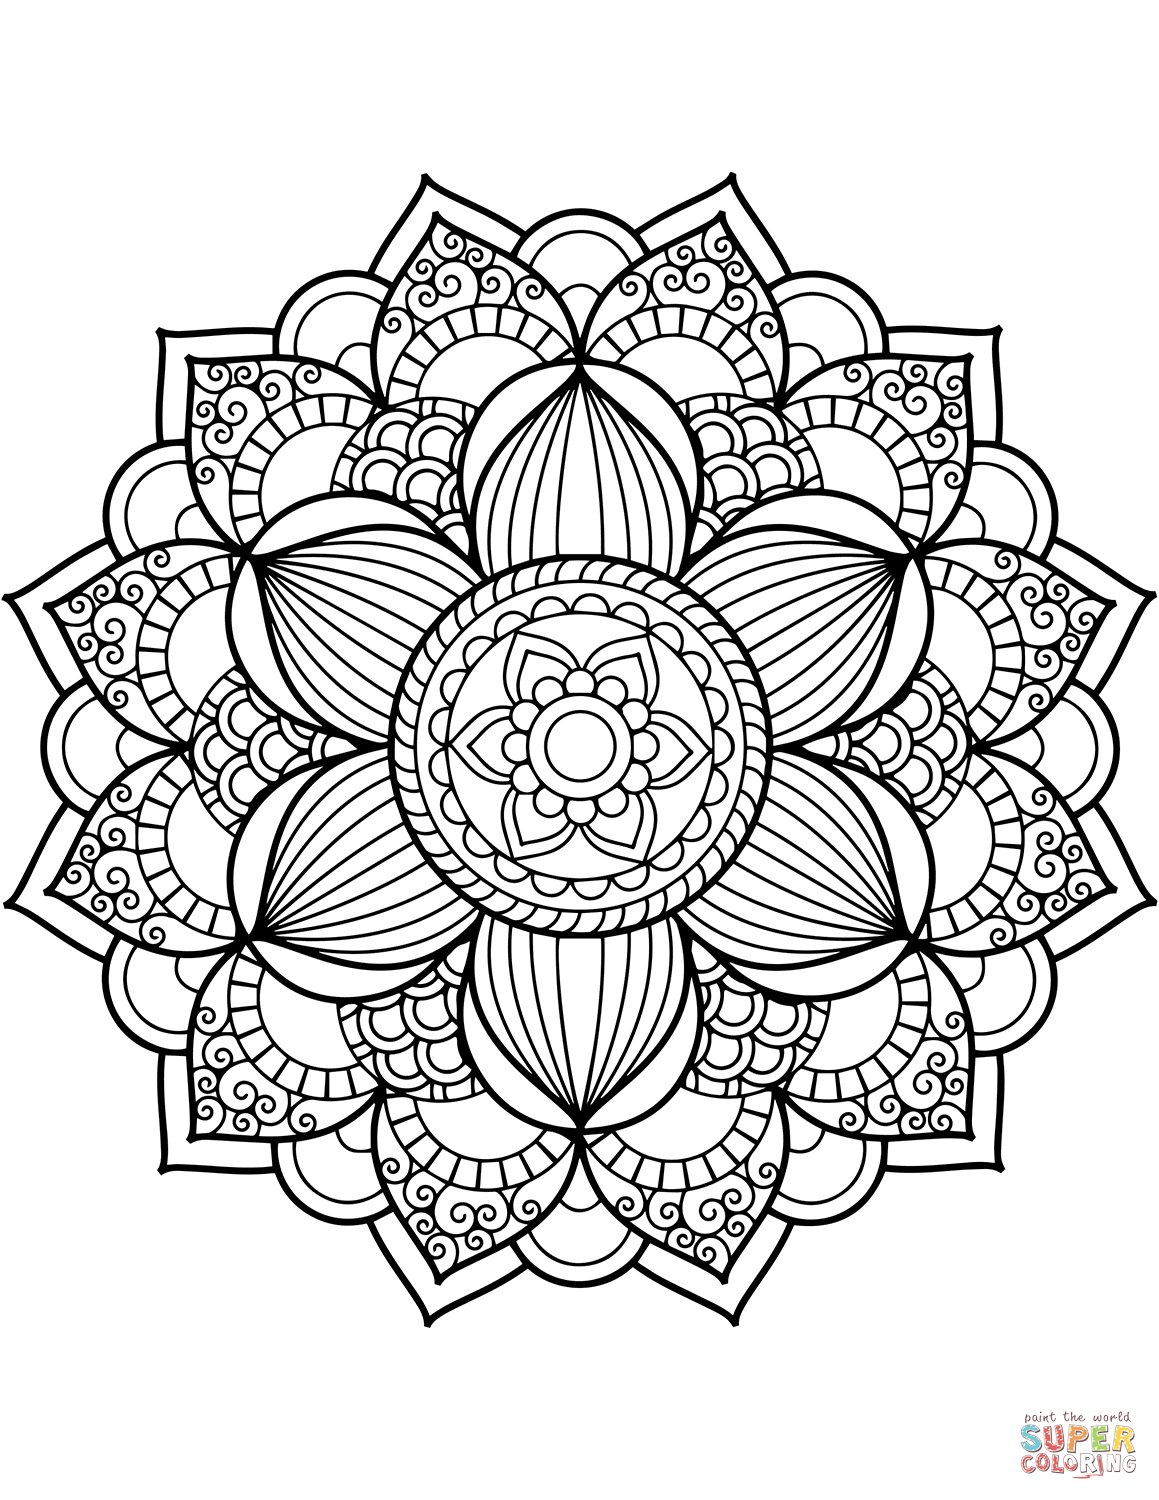 Flower Mandala Coloring Page | Free Printable Coloring Pages - Mandala Coloring Free Printable